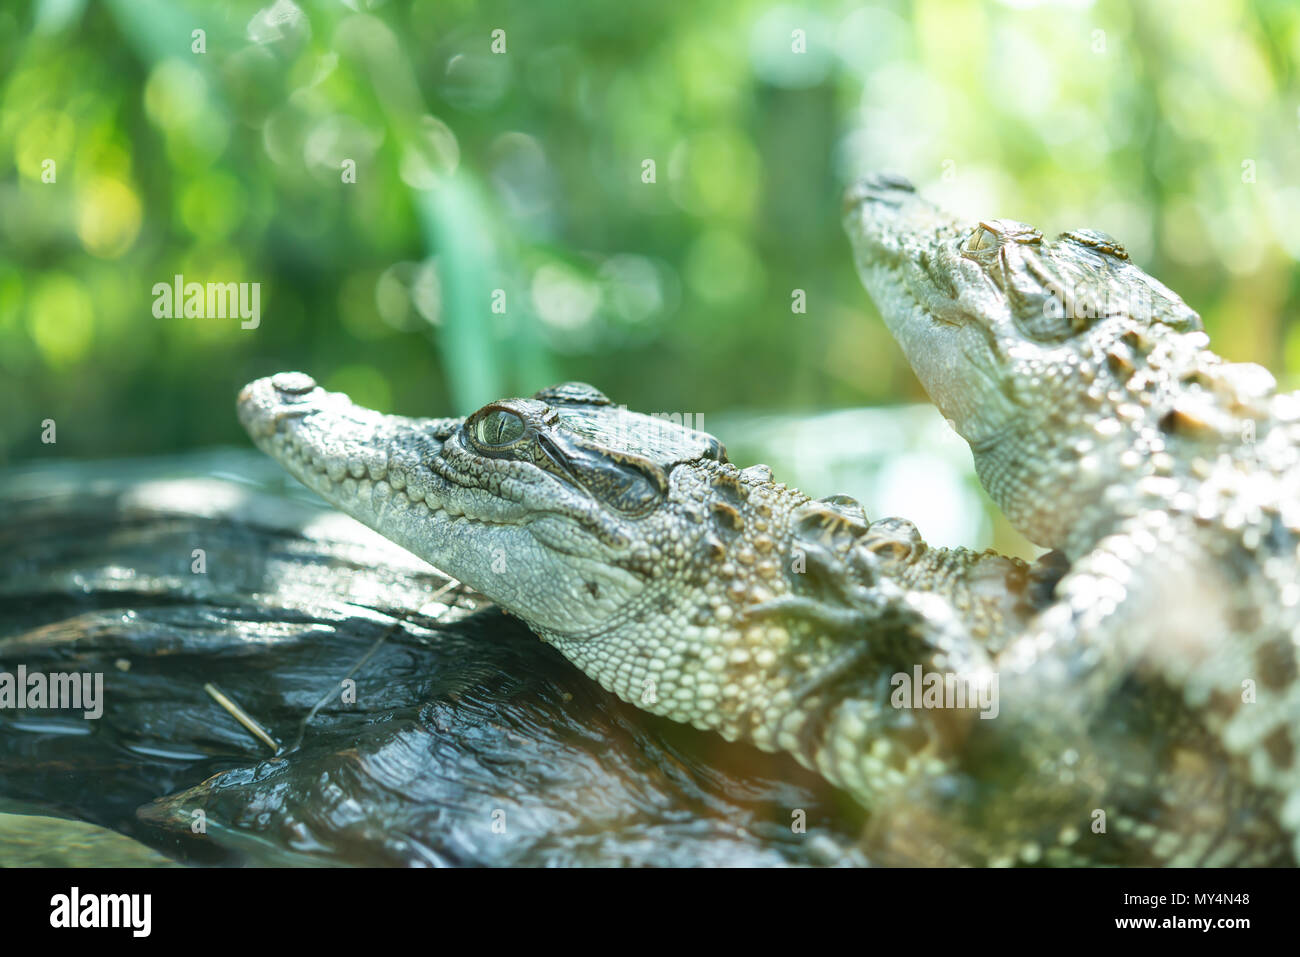 baby crocodiles in a tank Stock Photo